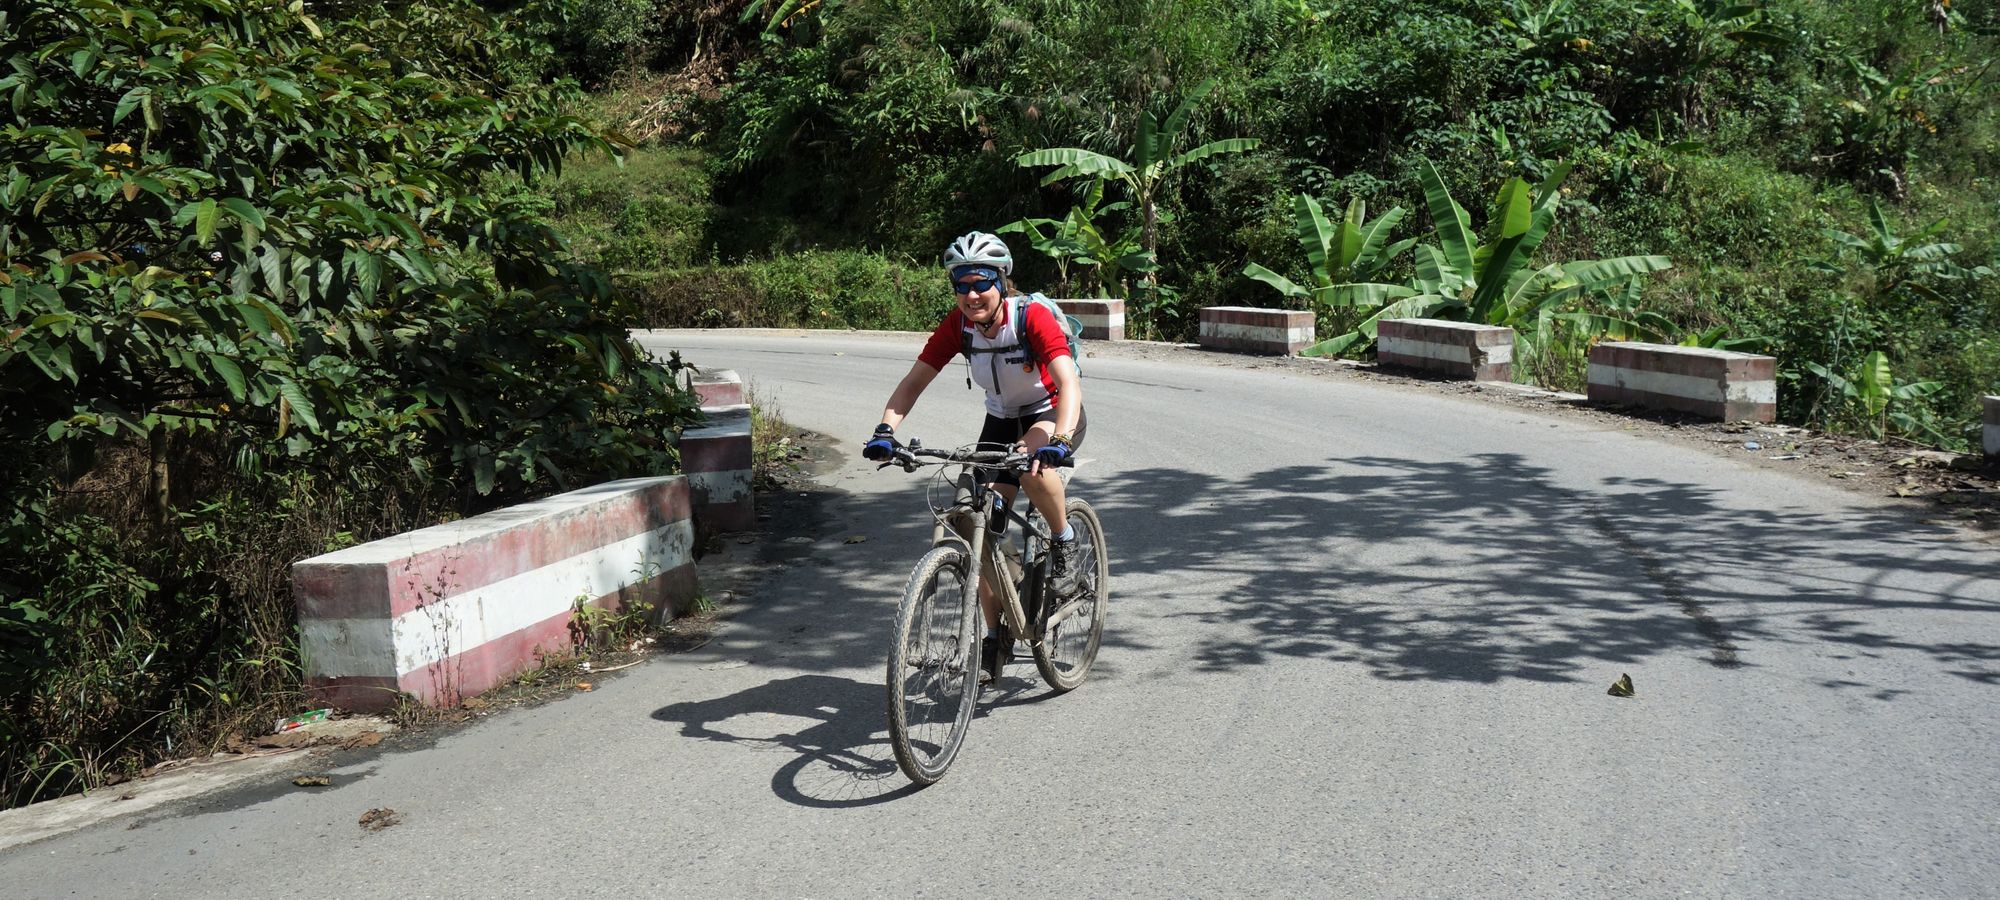 Cycling Holidays Thailand, Laos and Vietnam